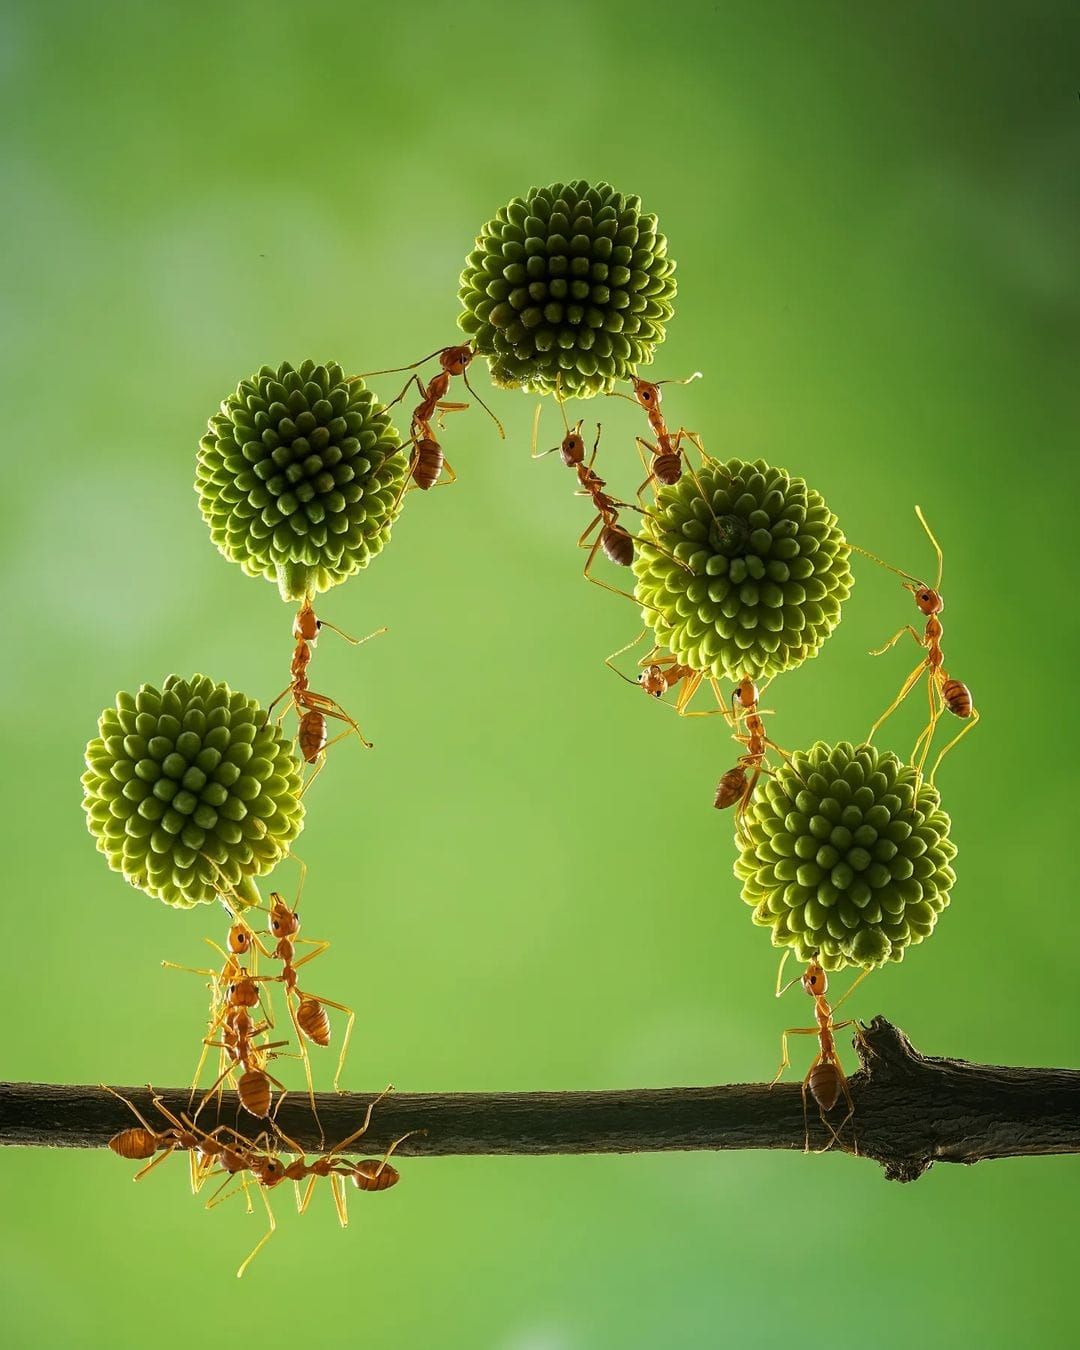 amazing photography ants team work by dzulfikri